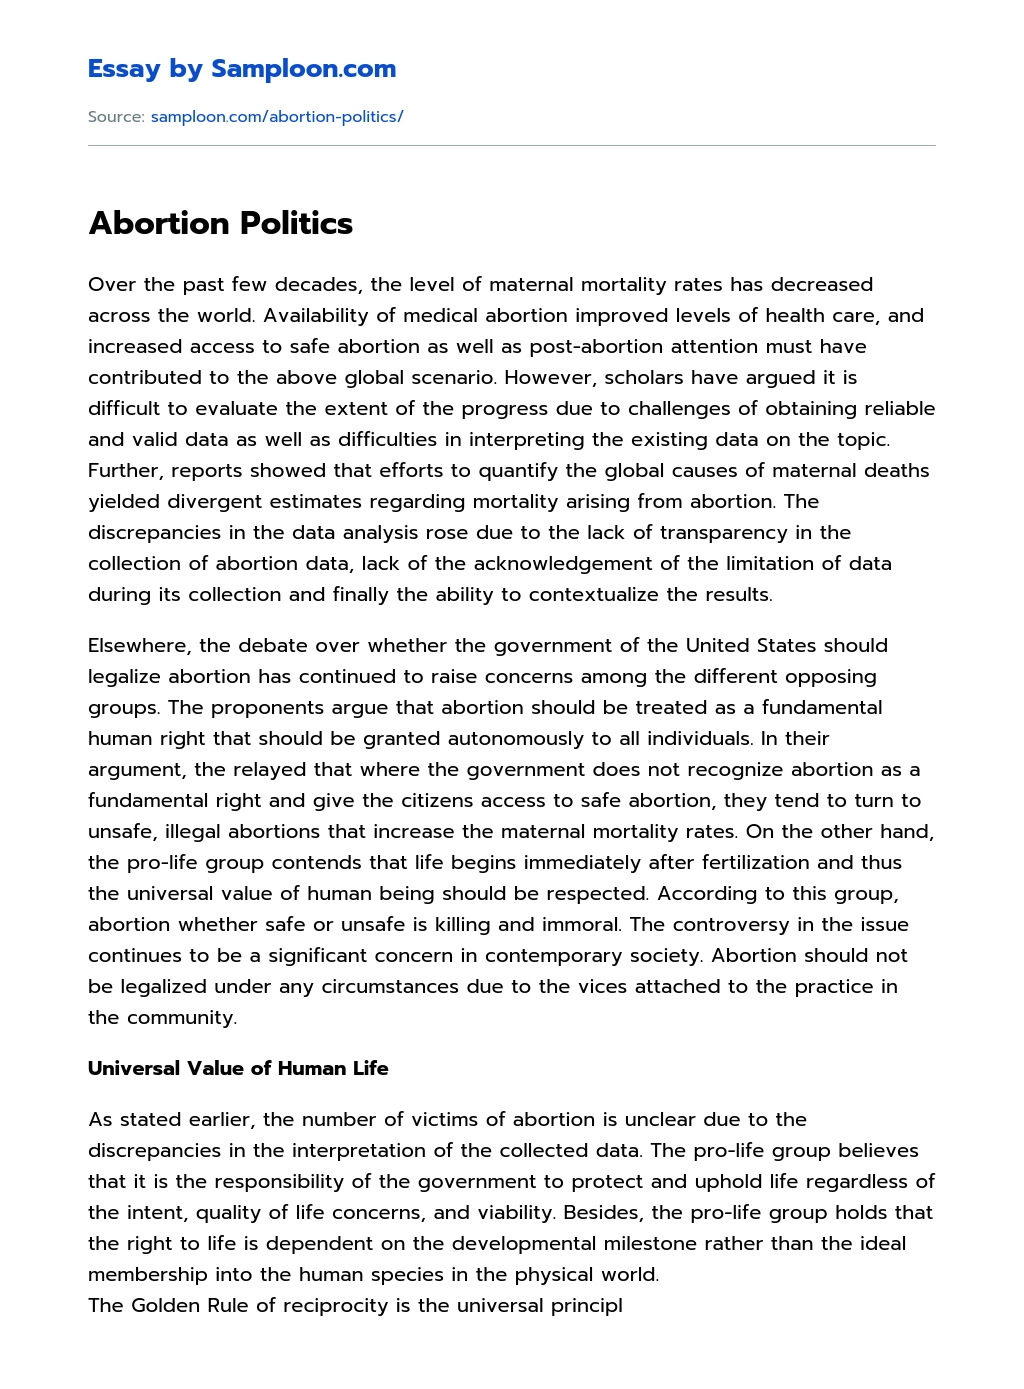 Abortion Politics essay